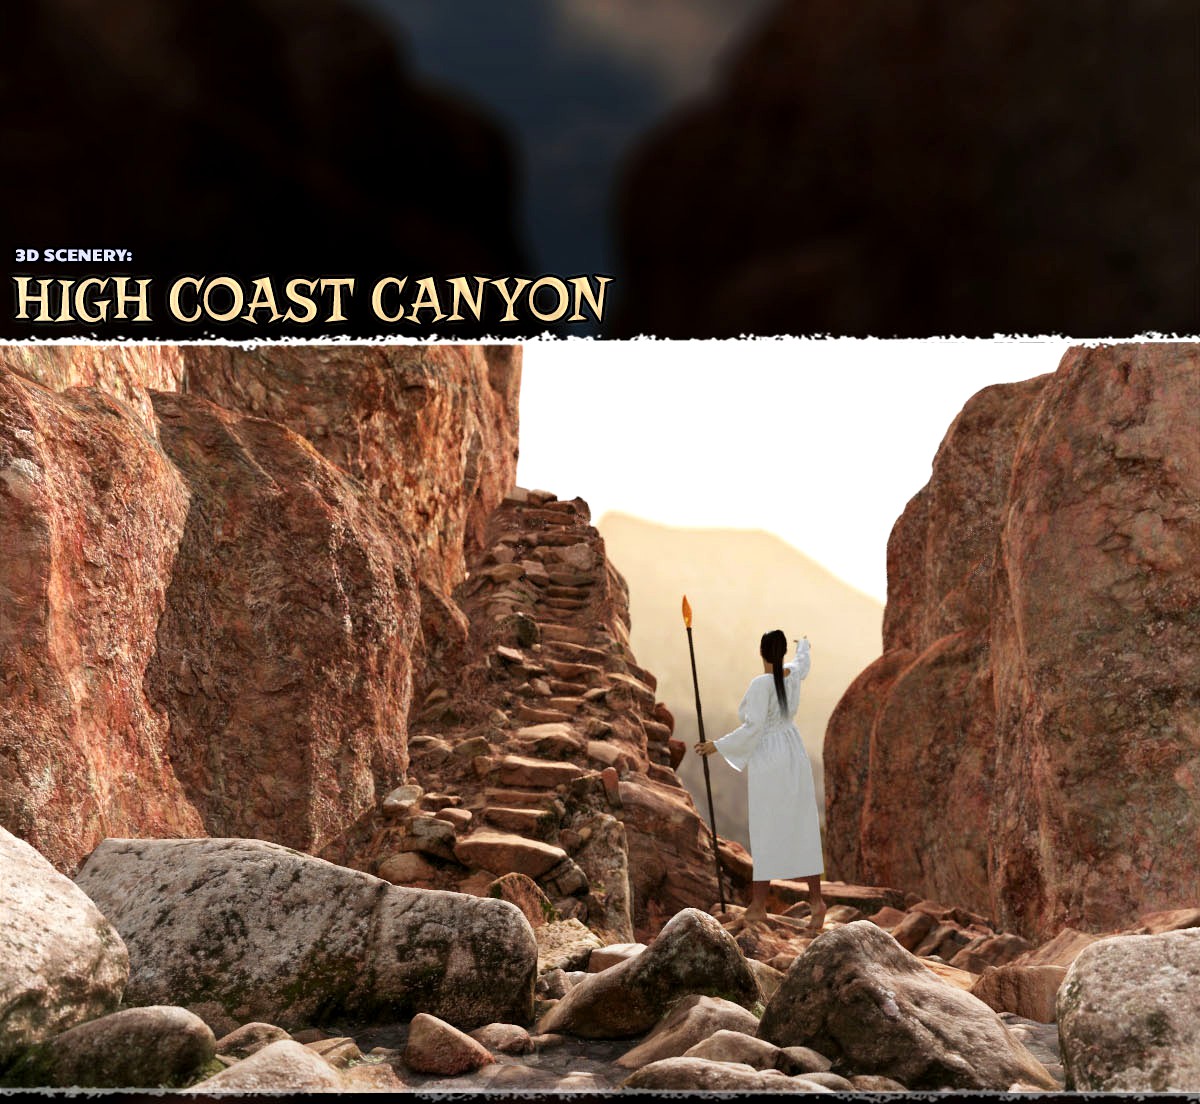 3D Scenery: High Coast Canyon